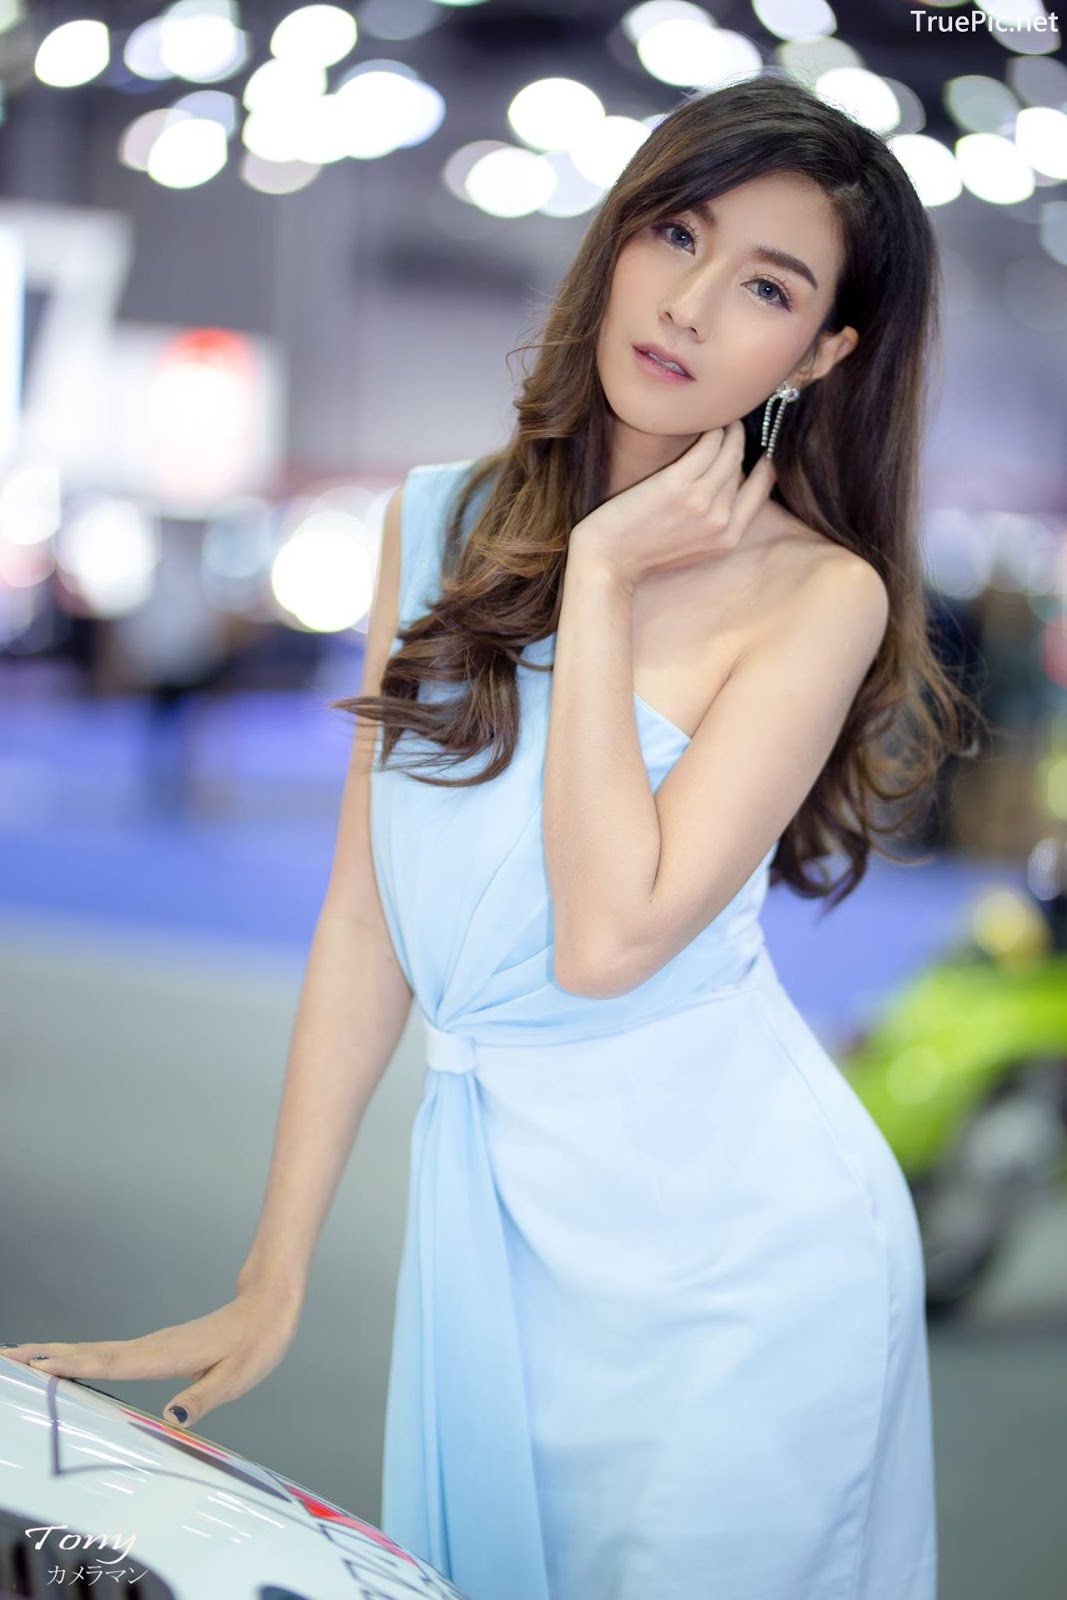 Image-Thailand-Hot-Model-Thai-Racing-Girl-At-Big-Motor-2018-TruePic.net- Picture-72